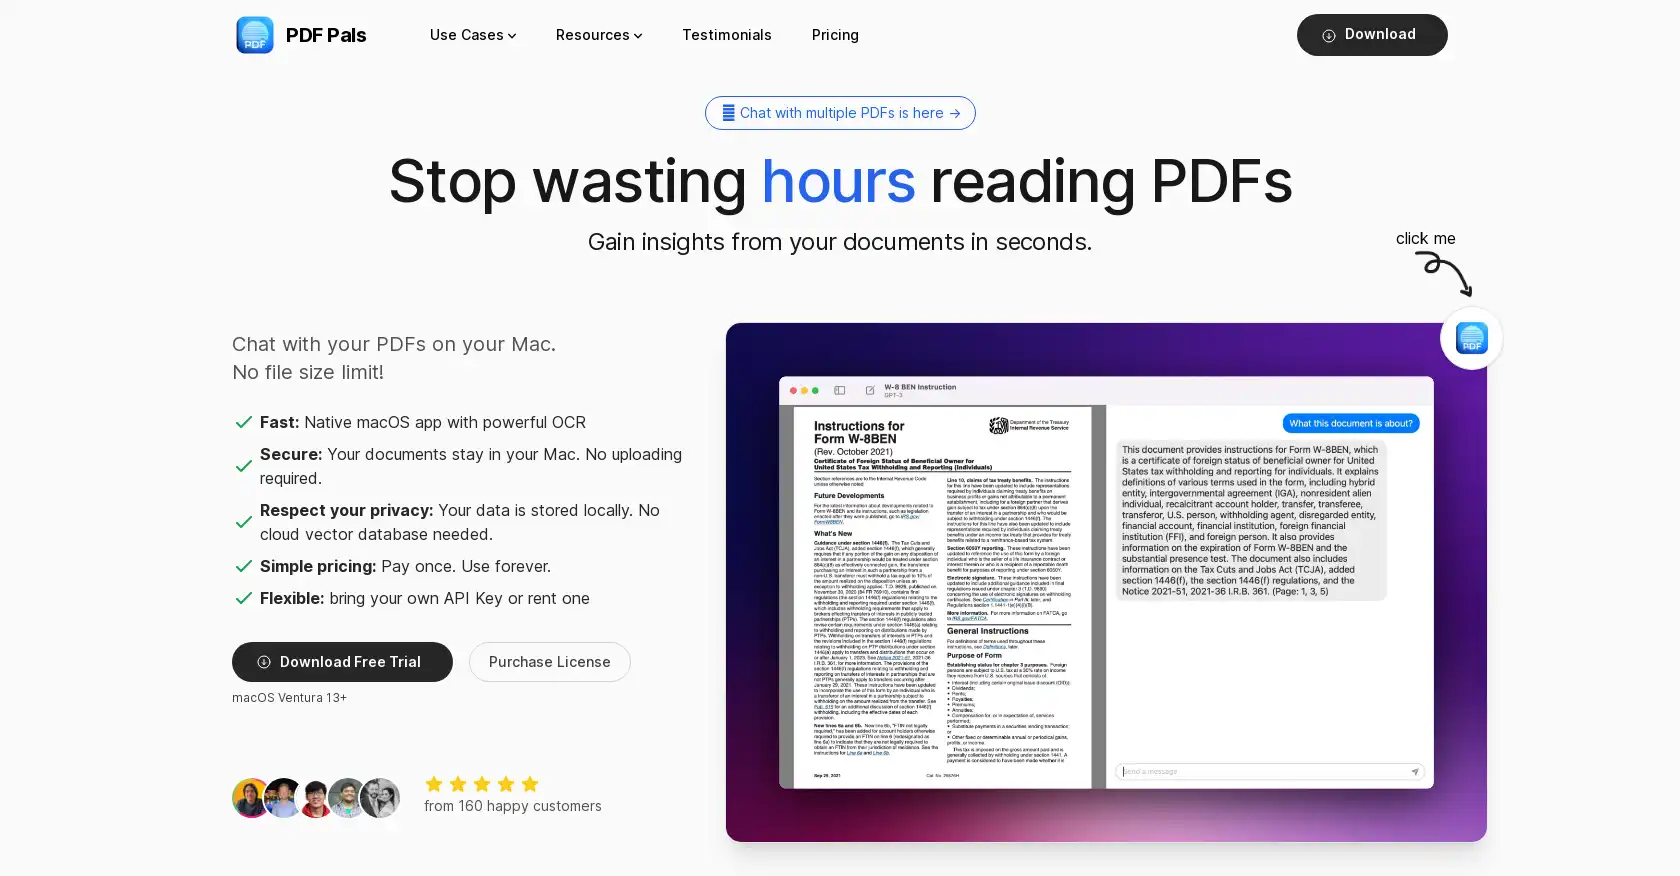 PDF pals